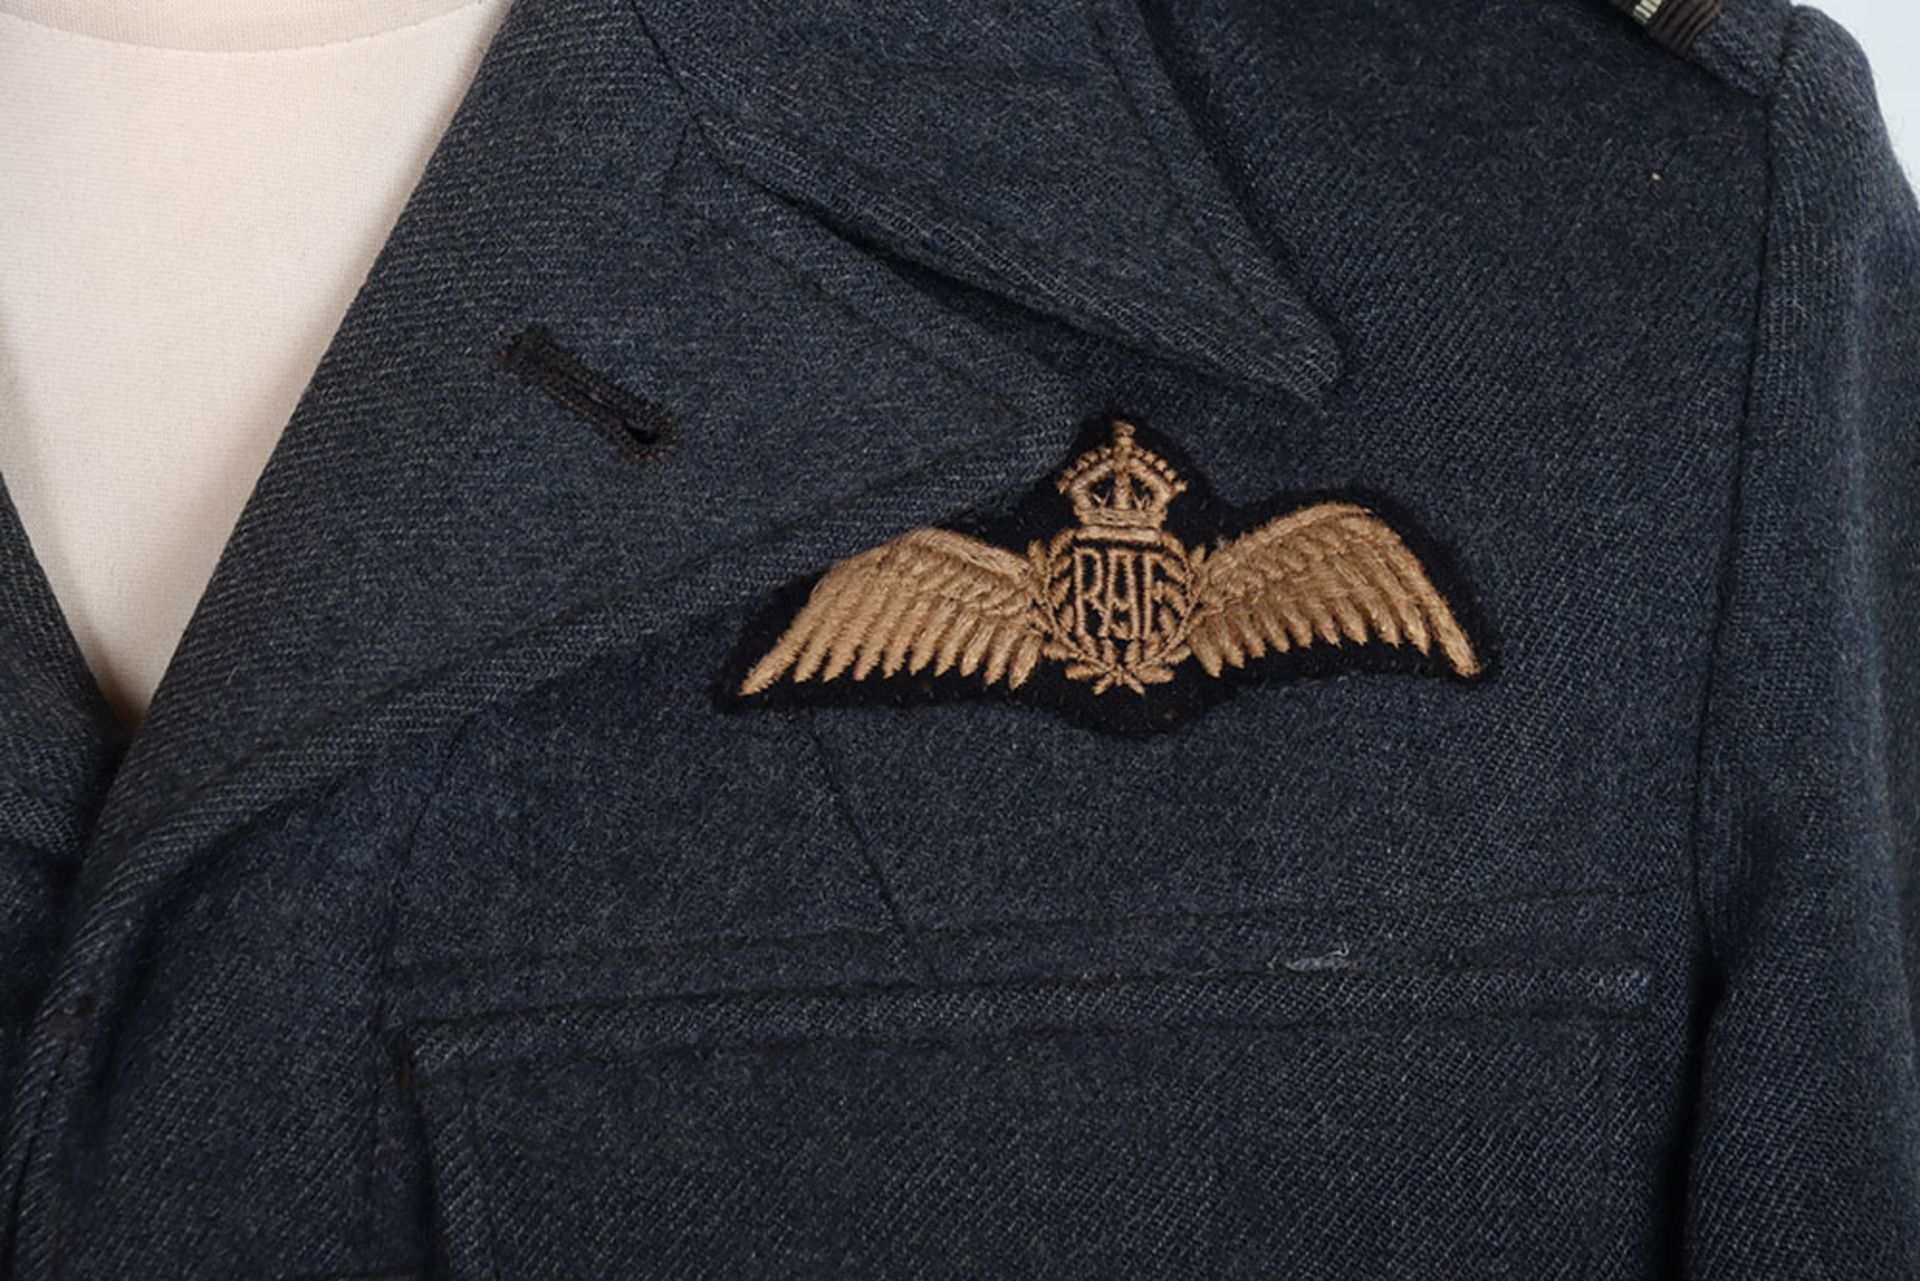 Post WW2 Royal Air Force Pilots Battle Dress Blouse - Image 2 of 8